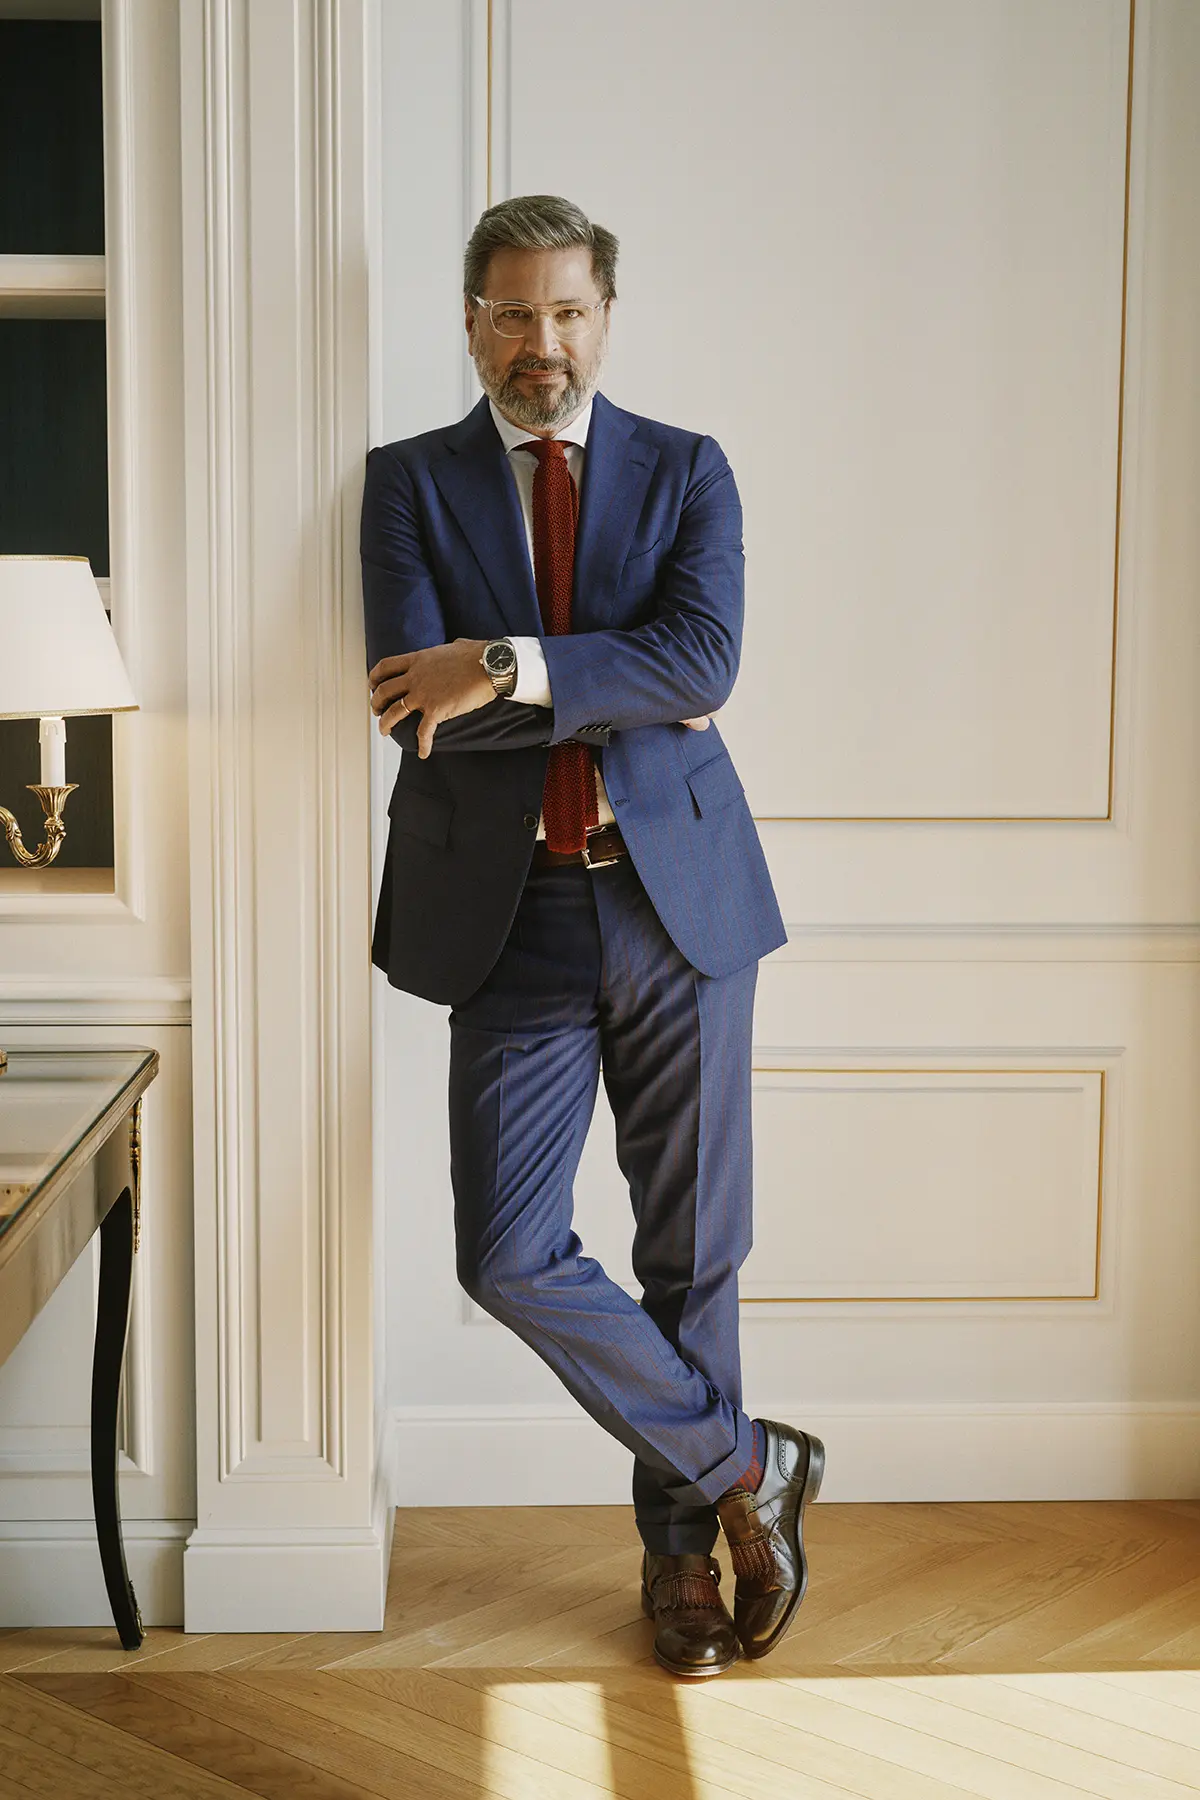 Guido Terreni, CEO of Parmigiani Fleurier